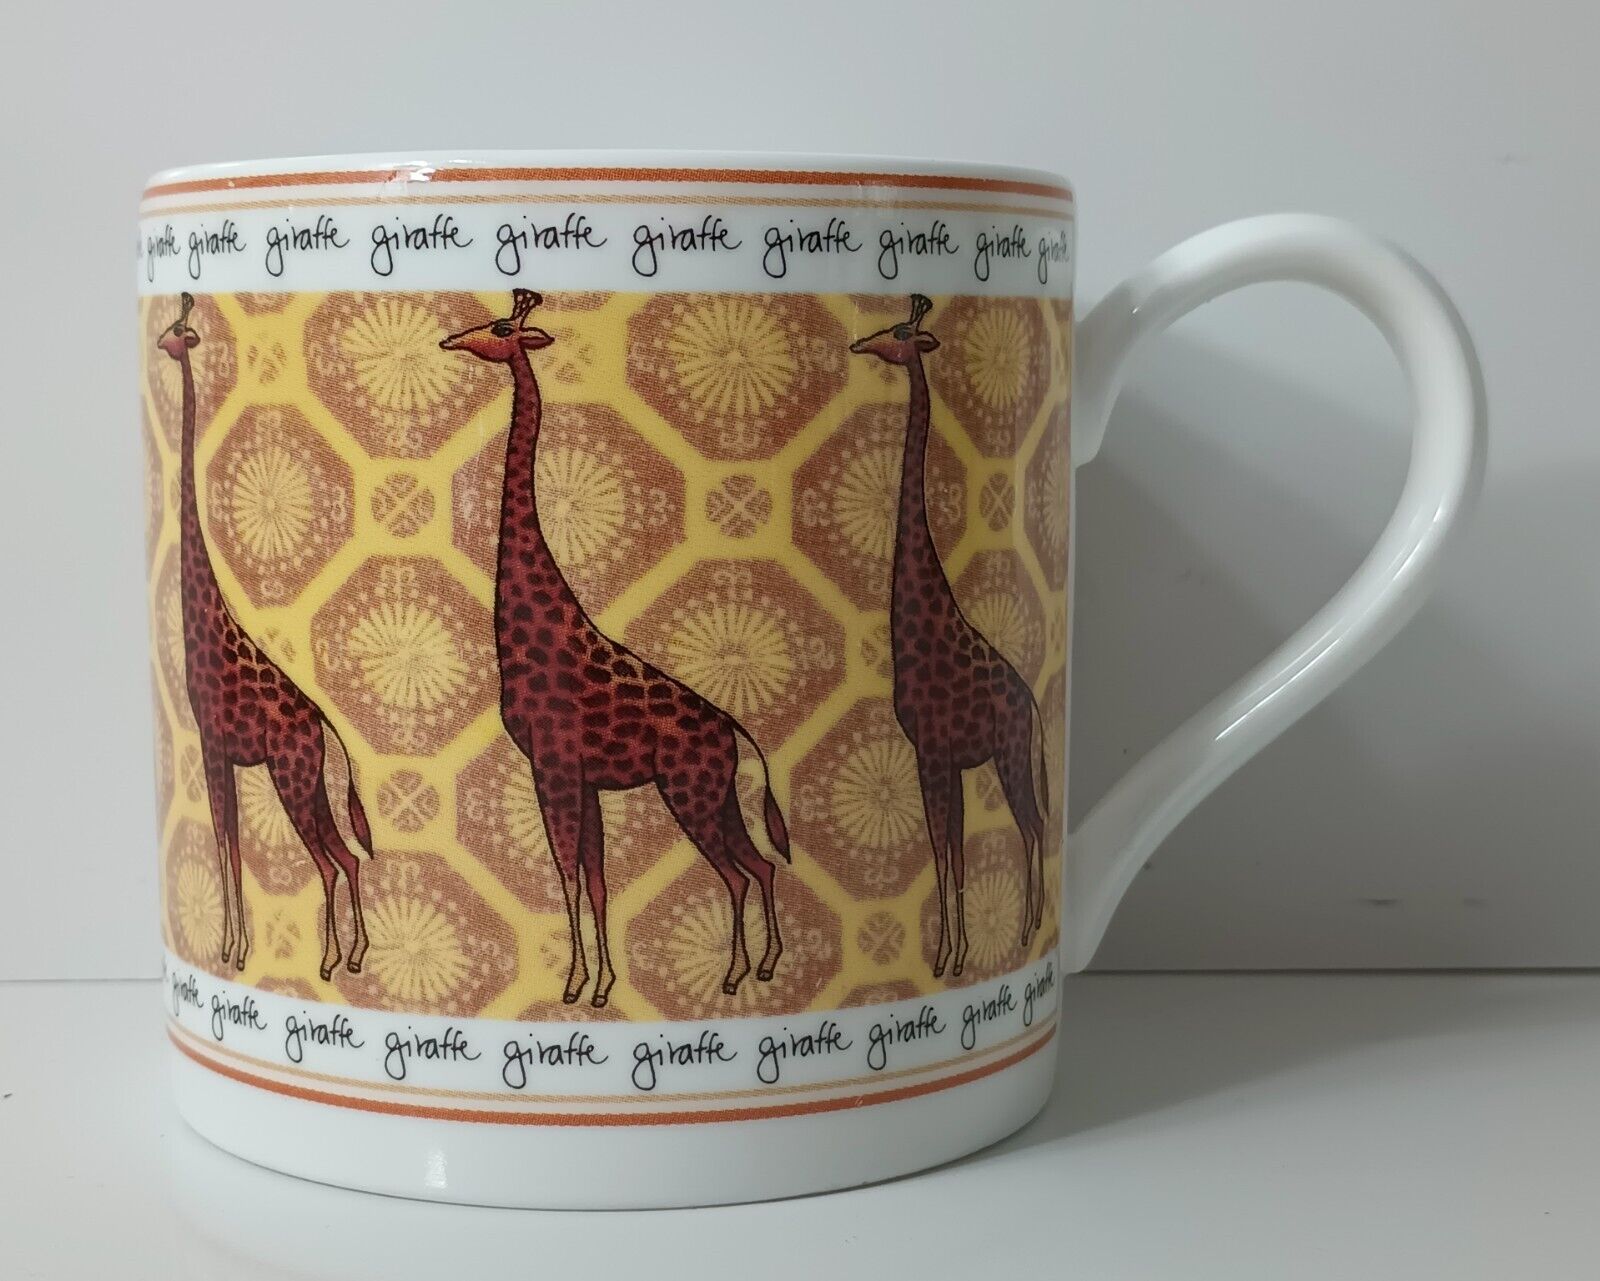 Vintage Wedgewood Giraffe Mug Cup 8 Oz Bone China 1996 England Preowned 